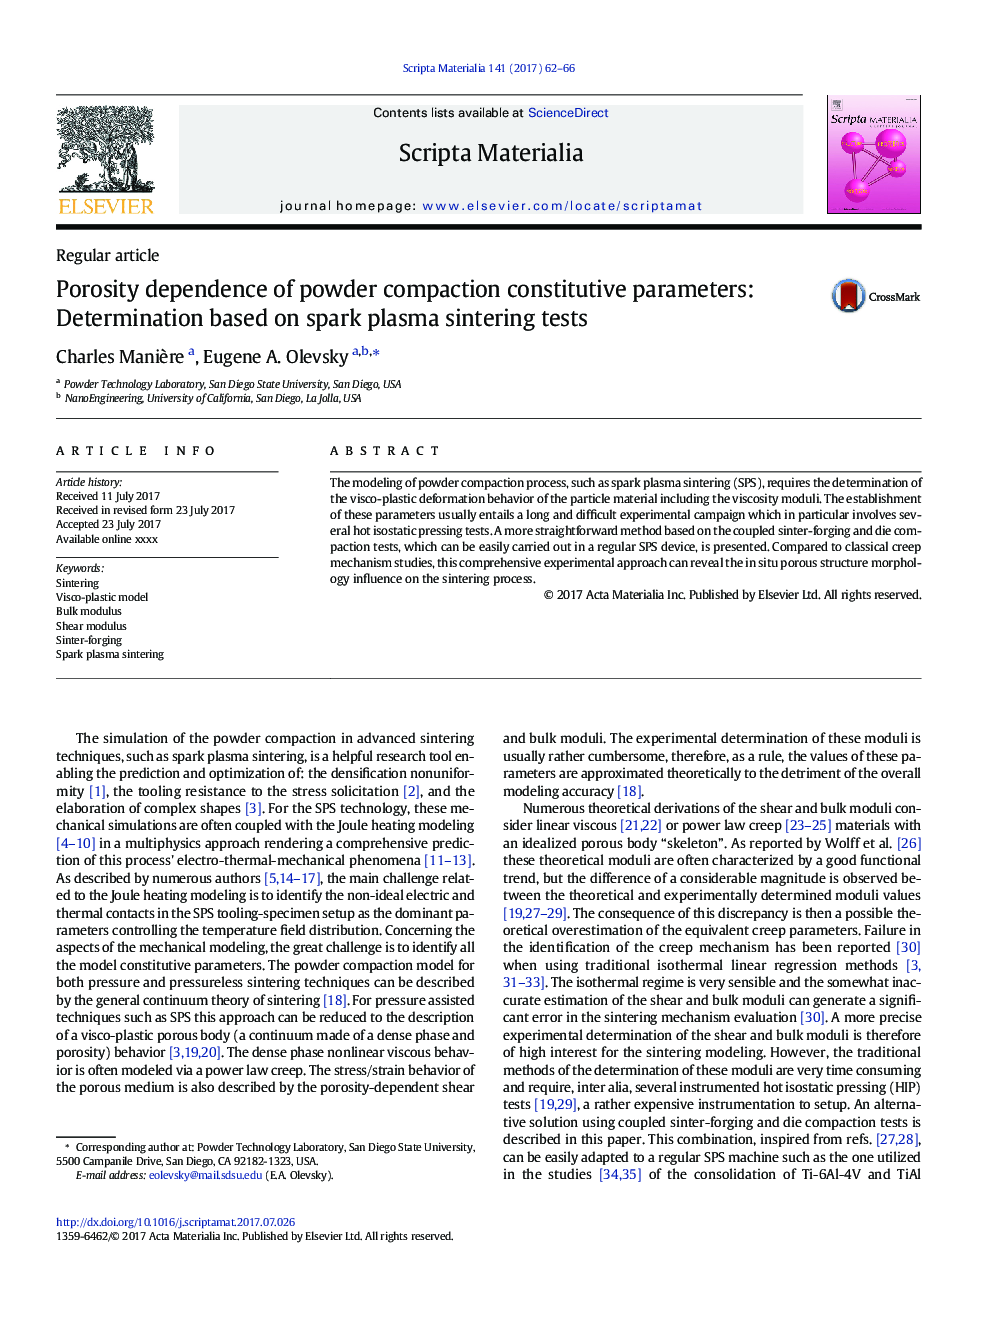 Porosity dependence of powder compaction constitutive parameters: Determination based on spark plasma sintering tests